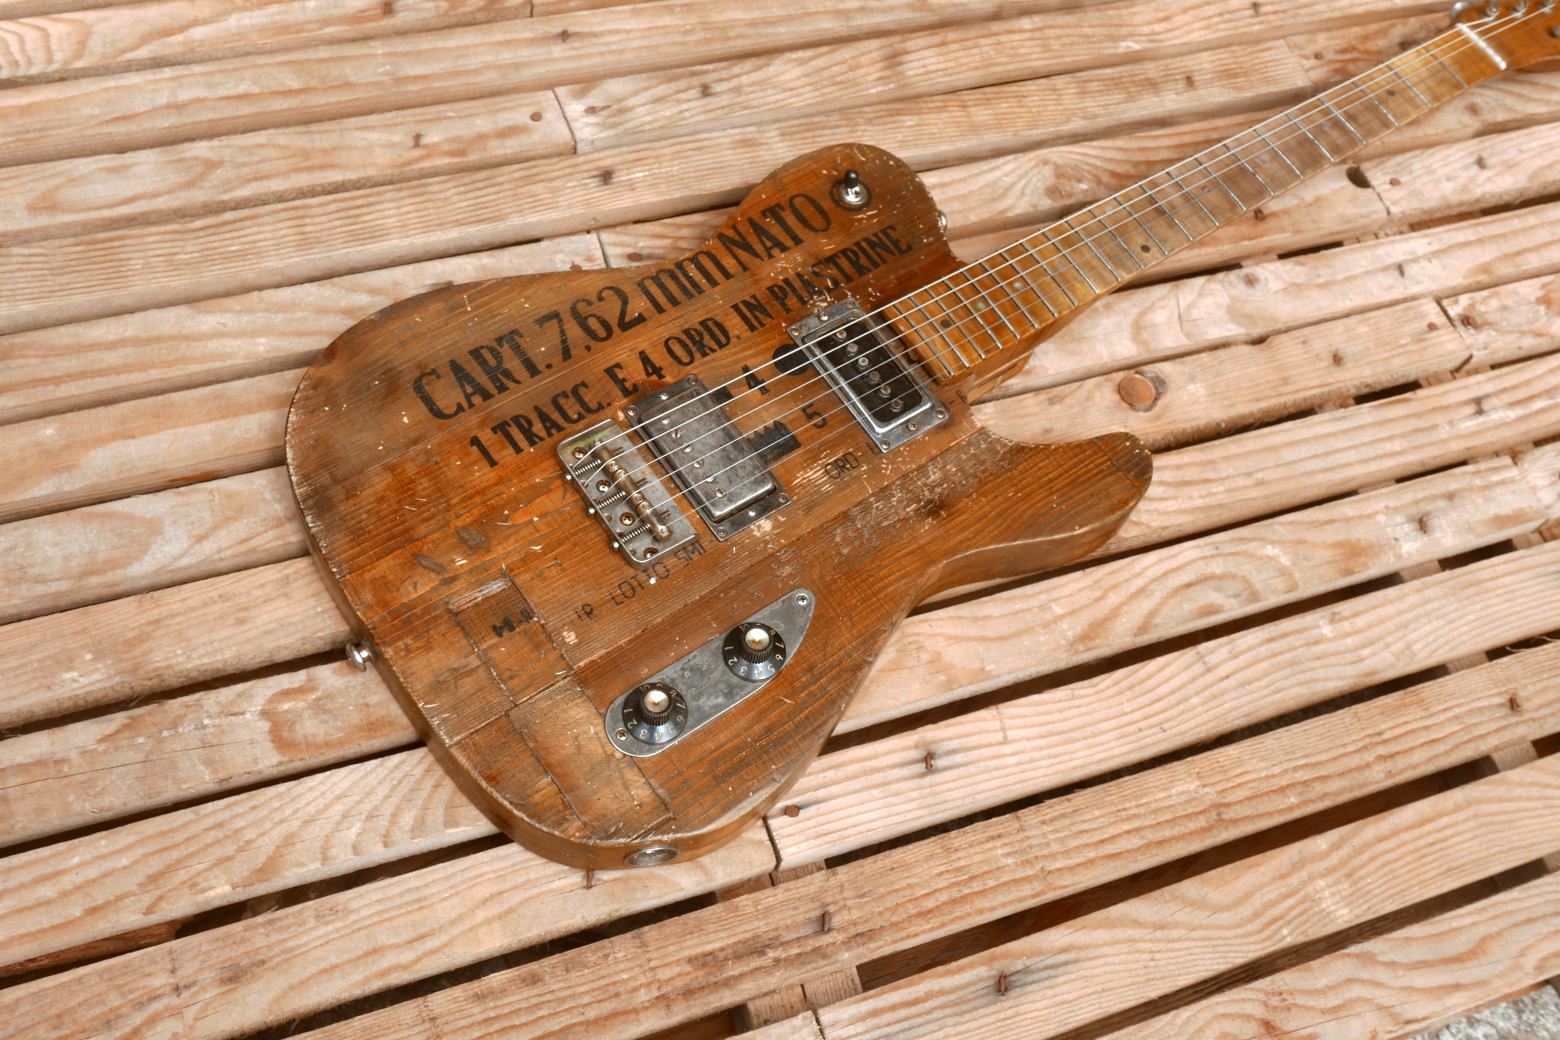 care barn telecaster guitar